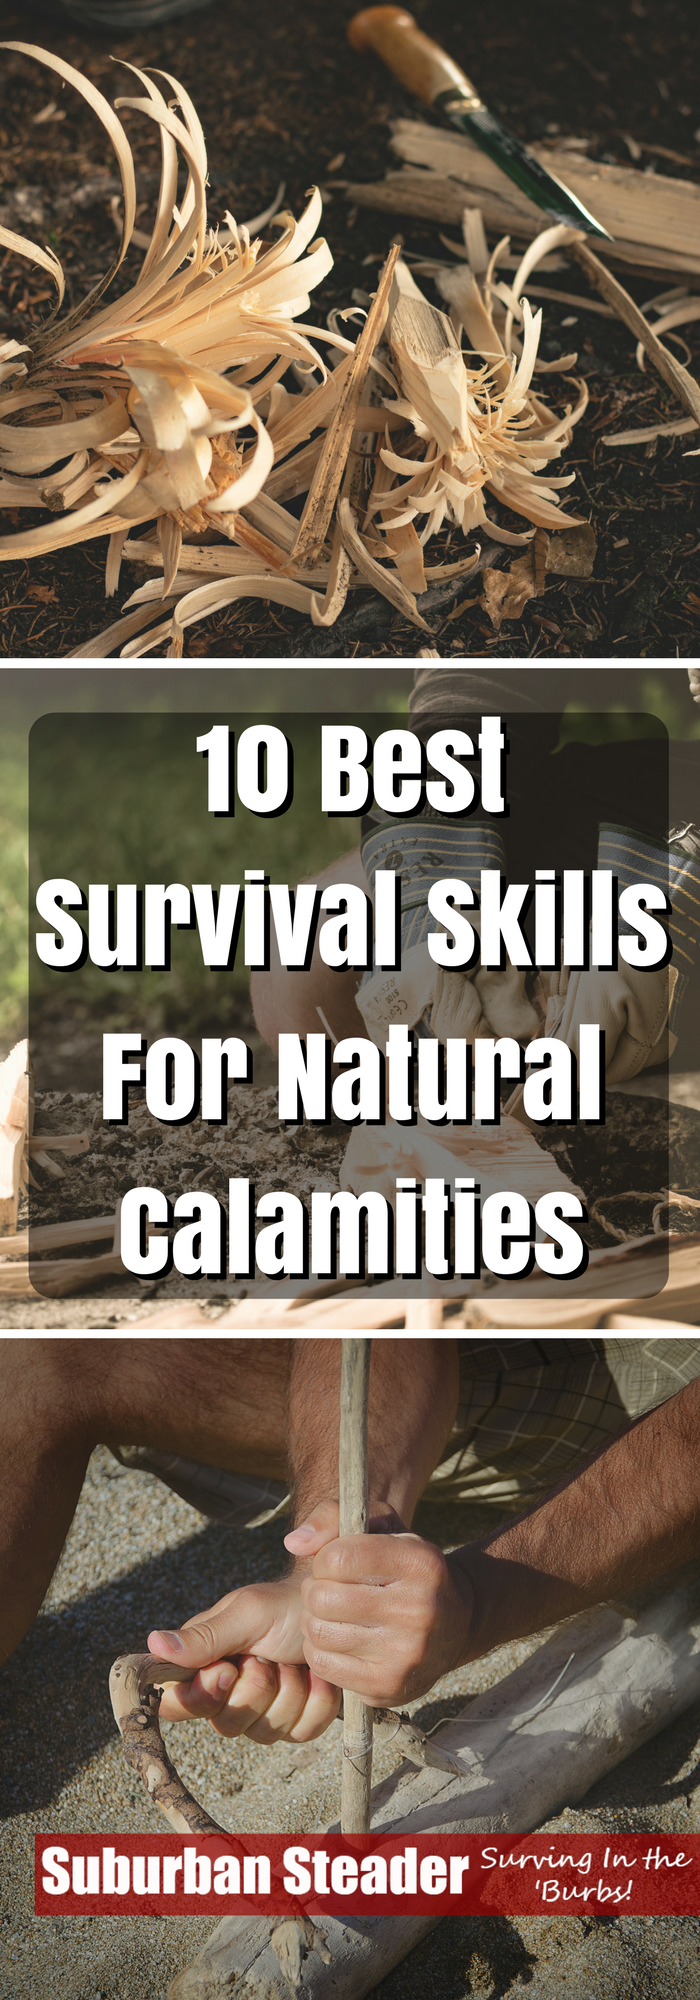 10 Best Survival Skills for Natural Calamities